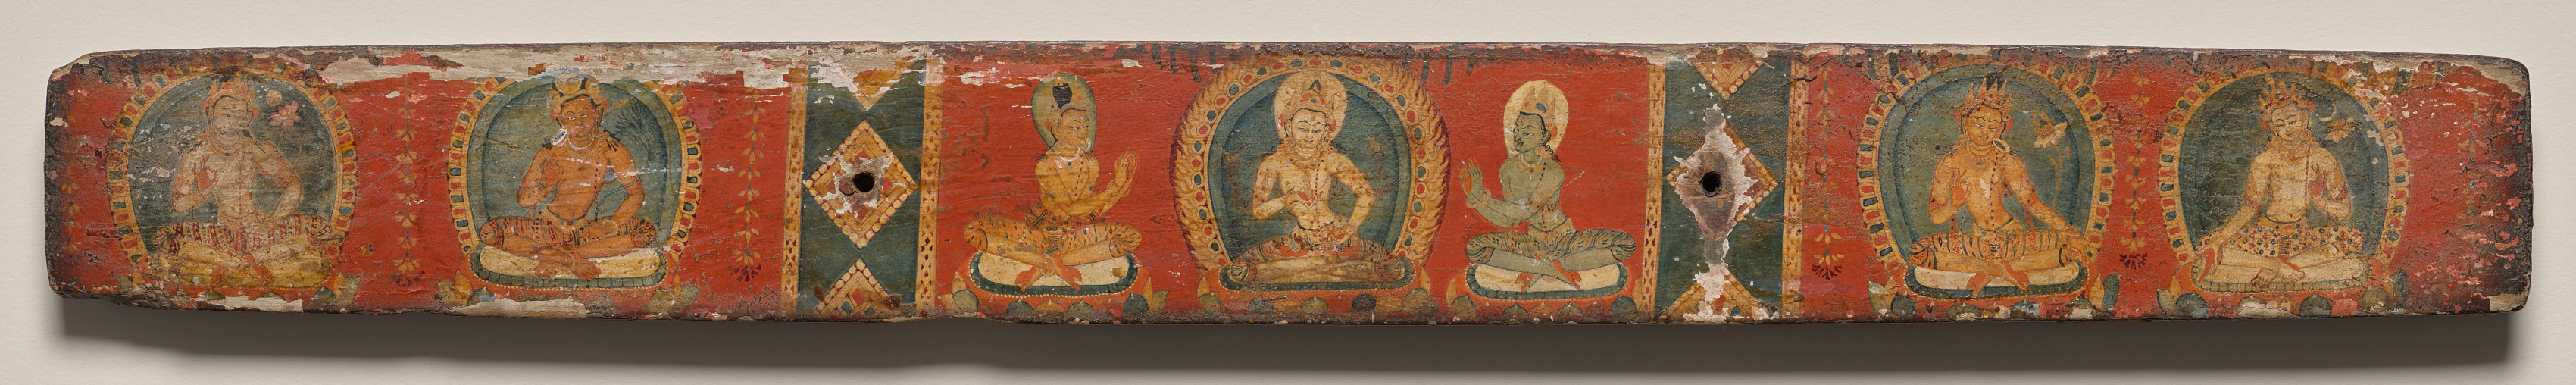 Four bodhisattvas and two attendants flanking Vajrasattva, bottom cover, from a Manuscript of the Perfection of Wisdom in Eight Thousand Lines (Ashtasahasrika Prajnaparamita-sutra)